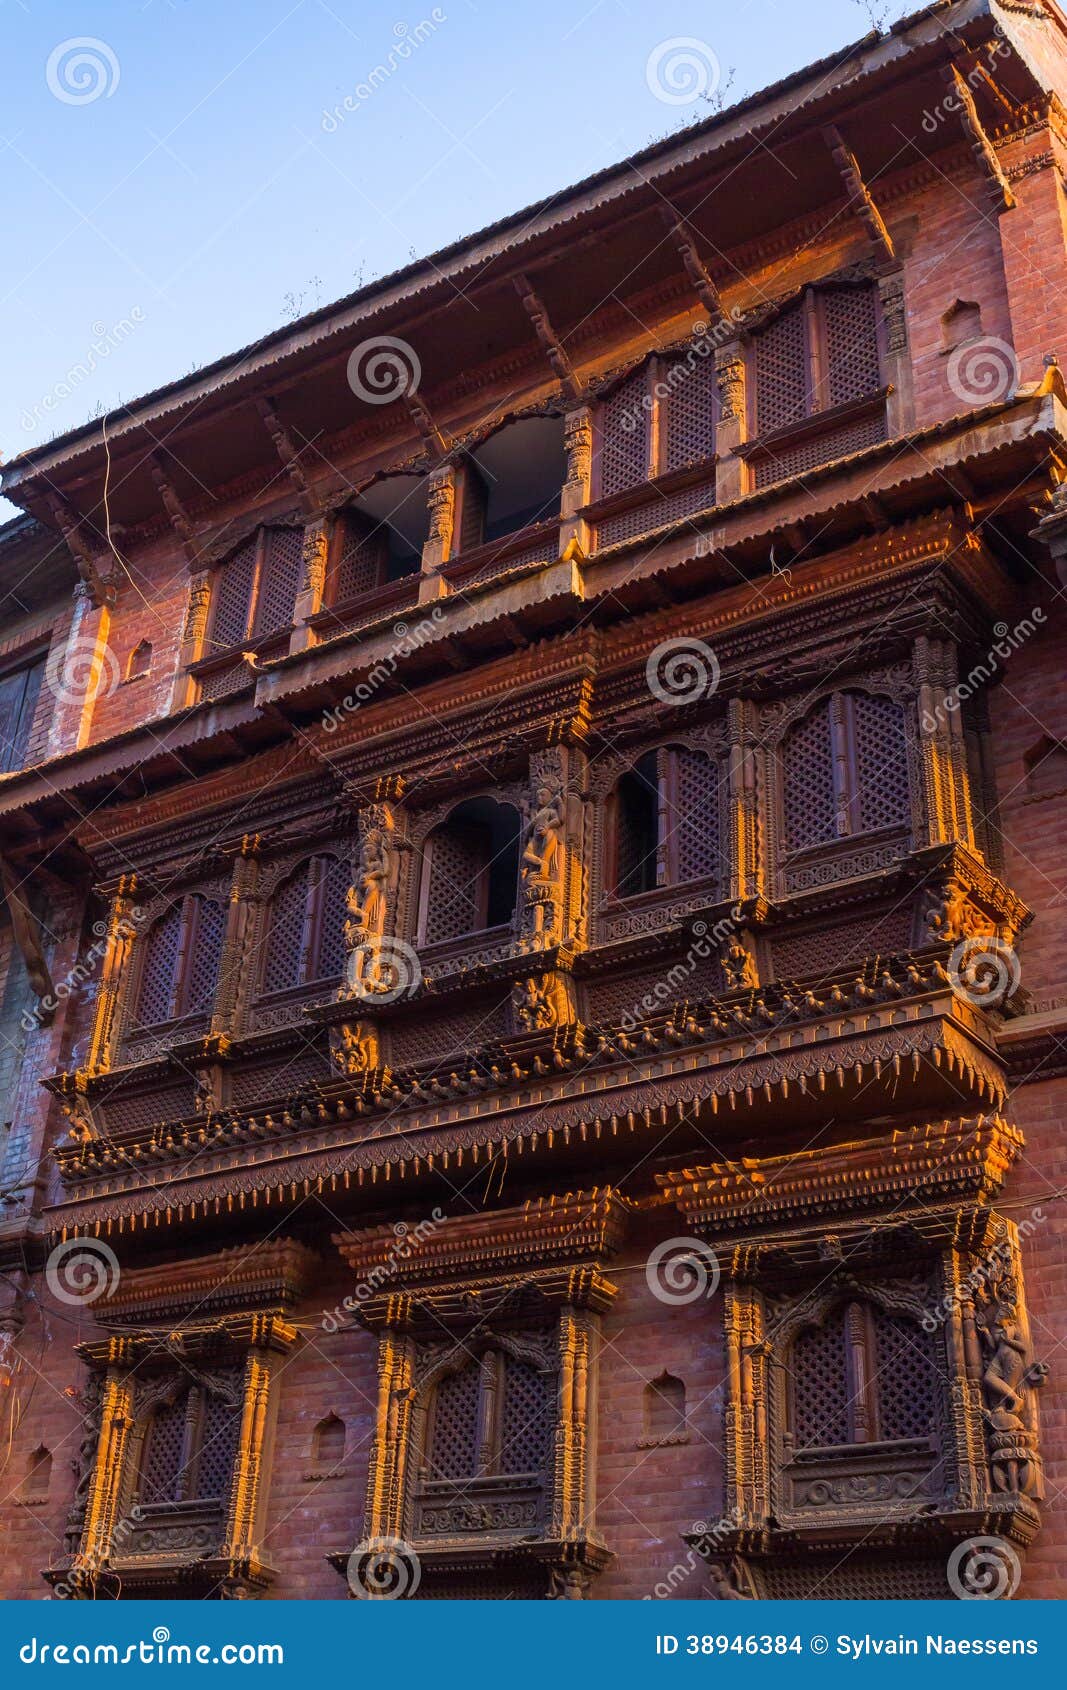 newar architecture - bhaktapur, nepal